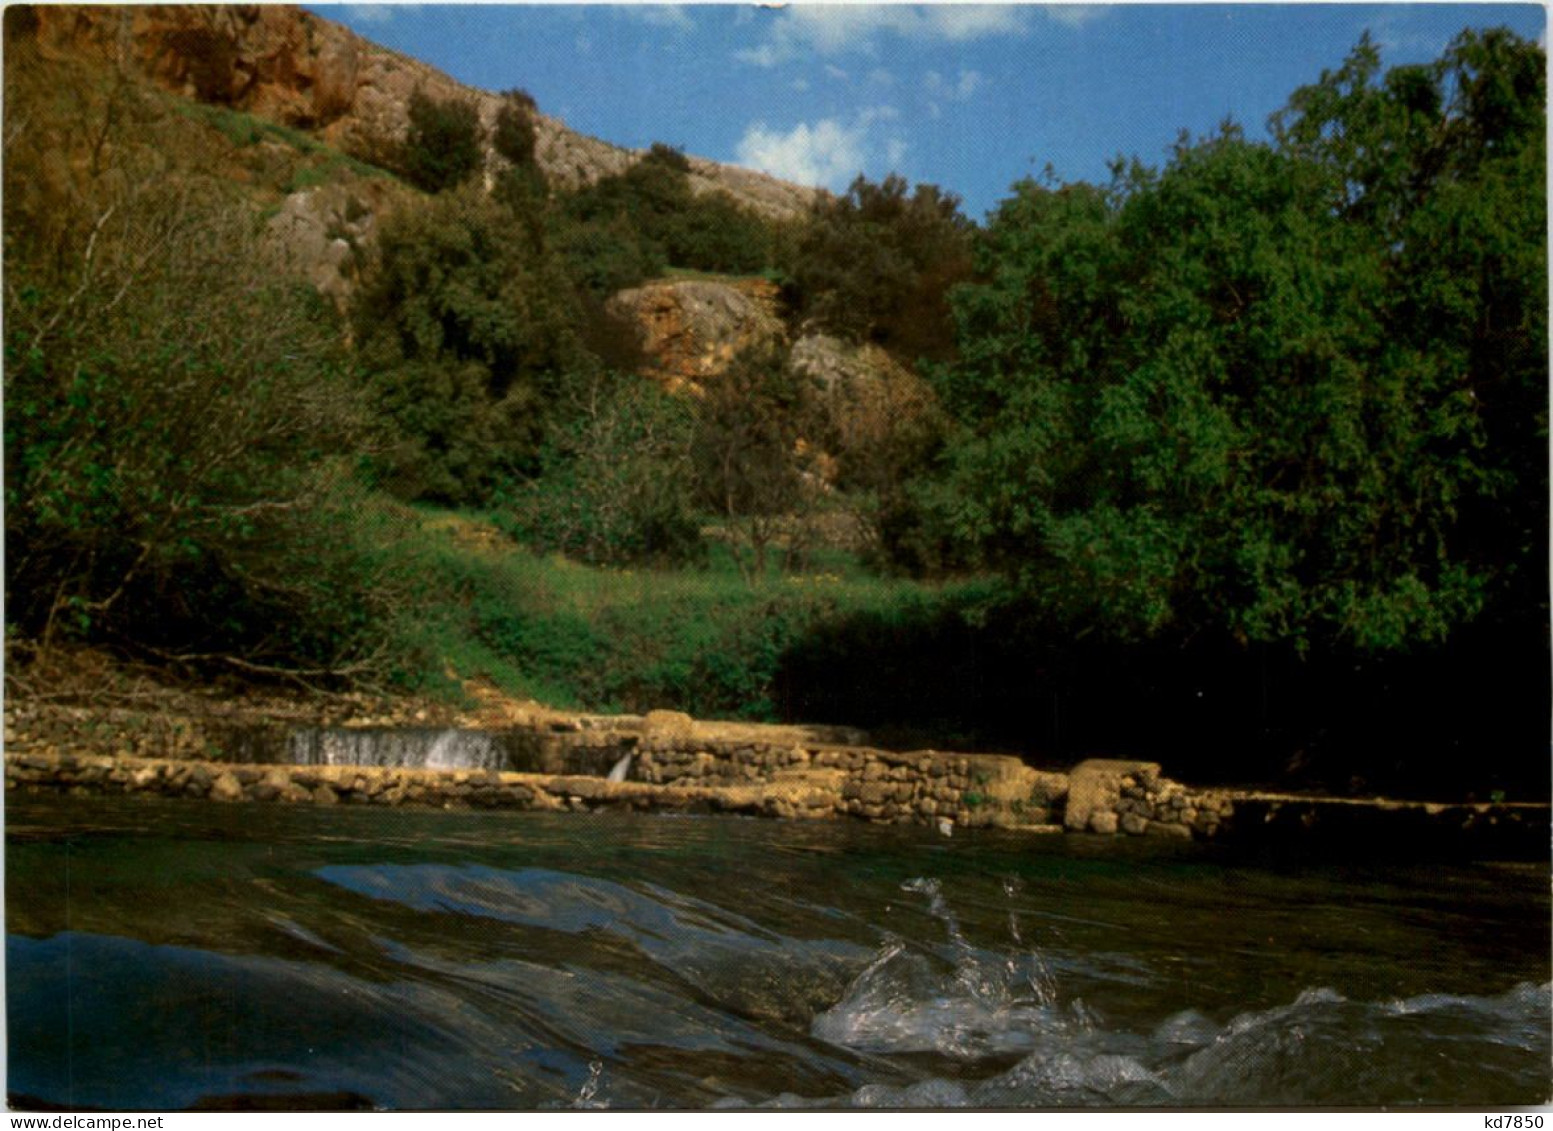 Israel - Jordantal Quellfluss Nahal Hermon - Israel